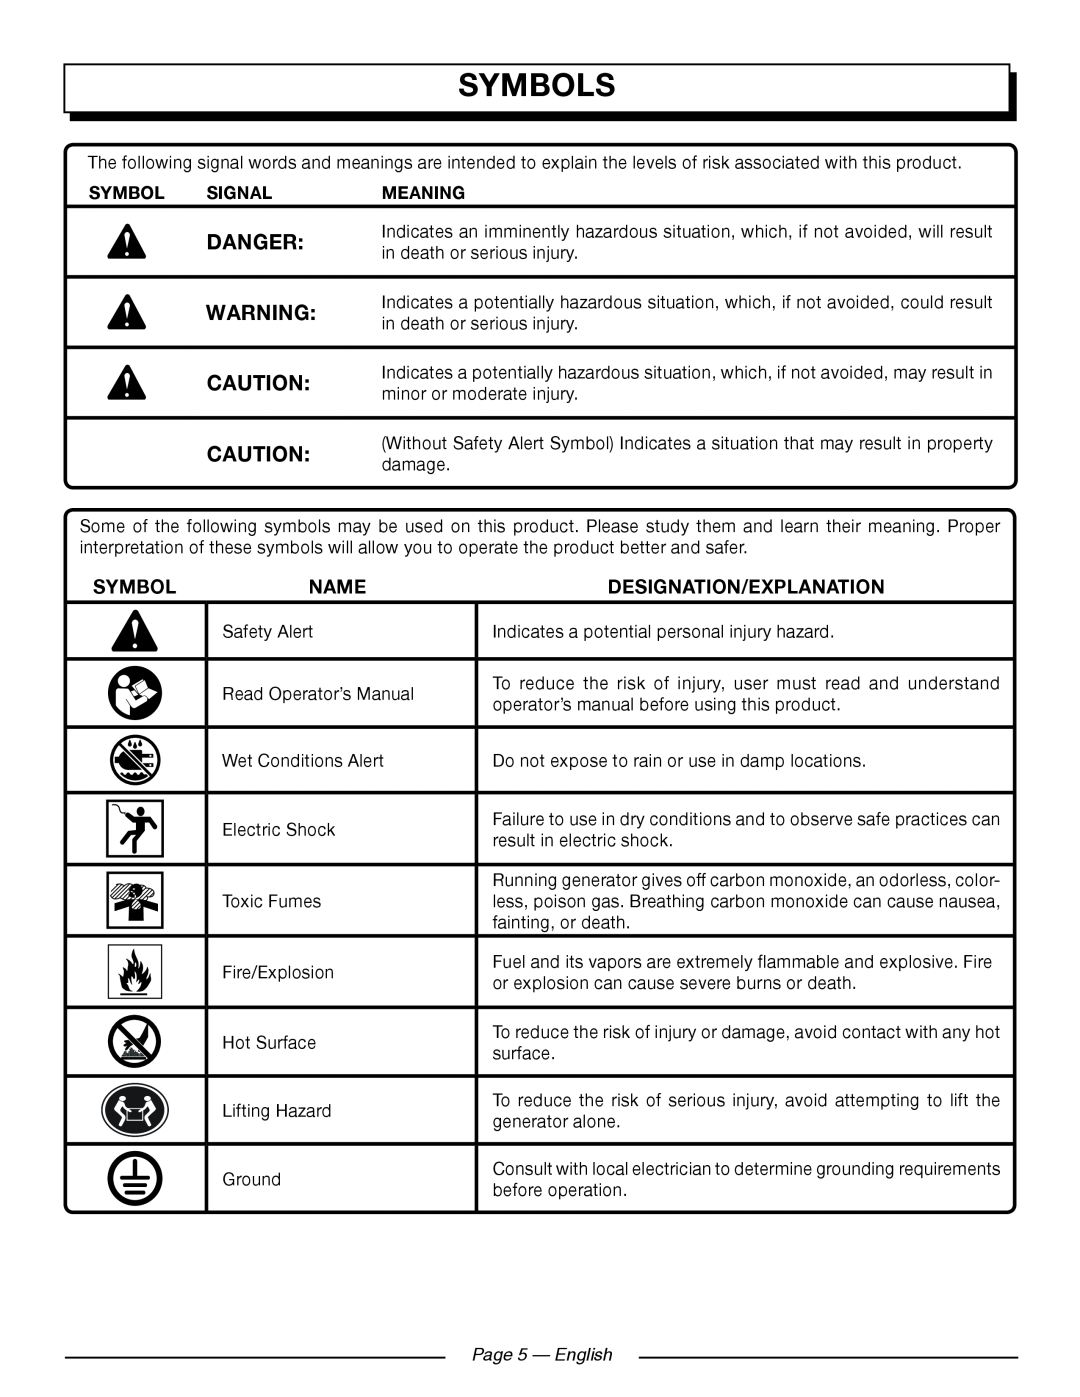 Homelite UT902250 manuel dutilisation Symbols, Name, Designation/Explanation, Page 5 — English, Danger 